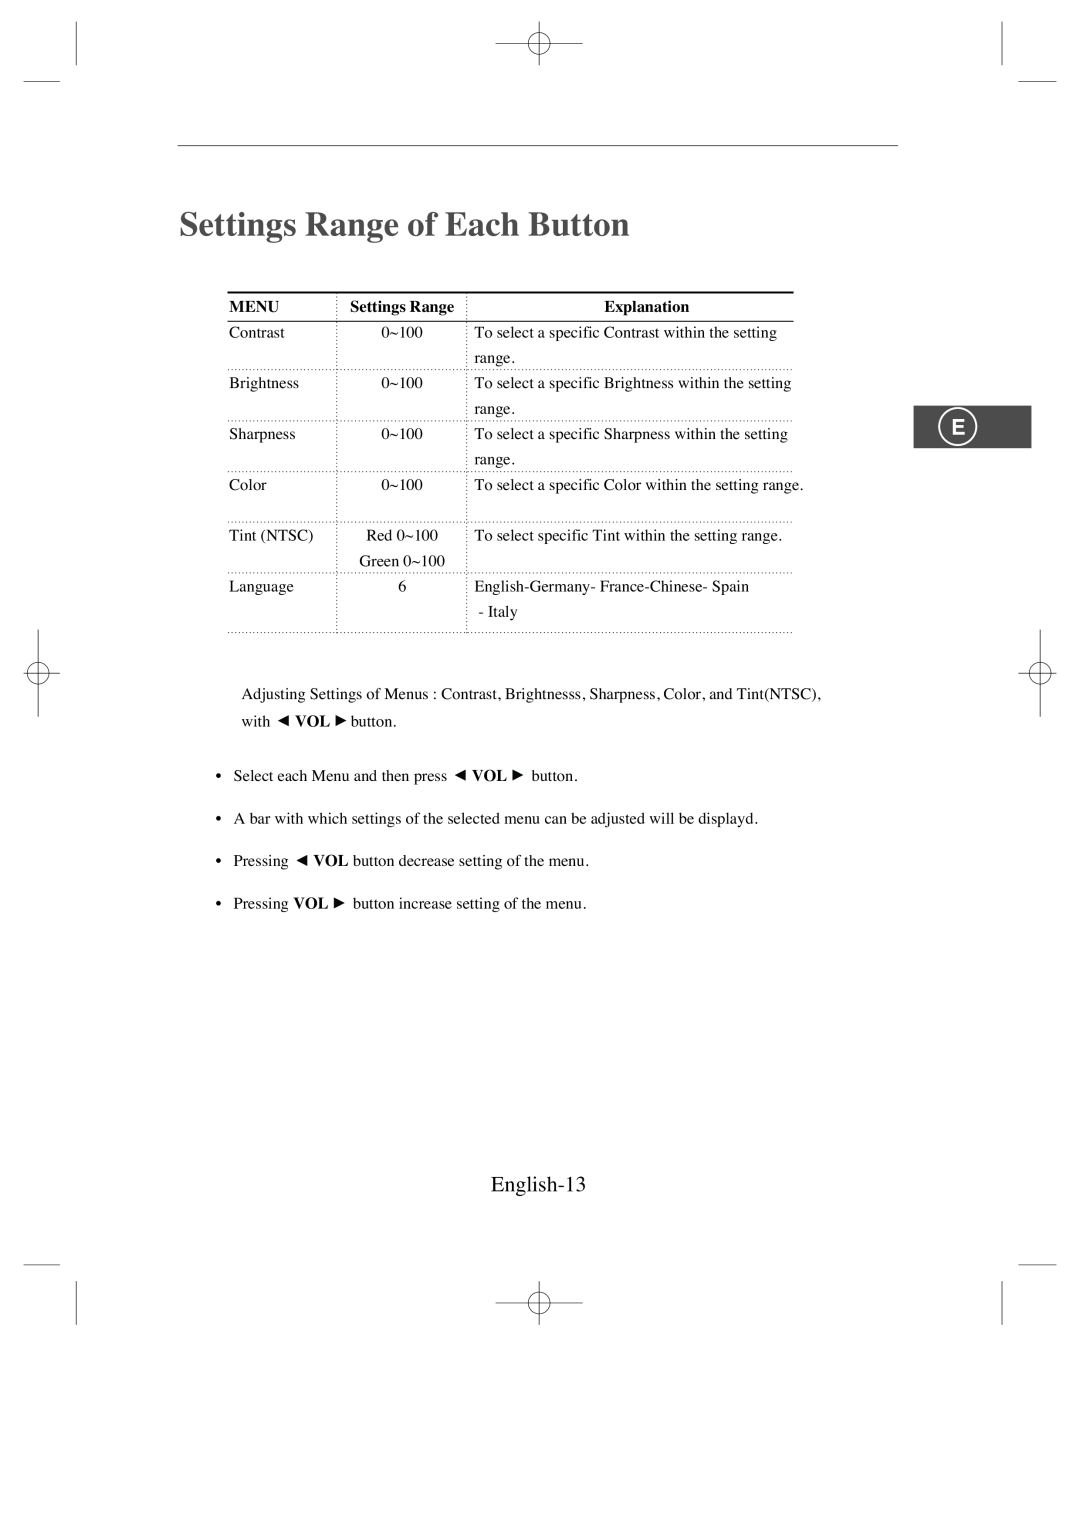 Samsung SMC-213, SMC-214 U manual Settings Range of Each Button, English-13, Menu, Explanation 